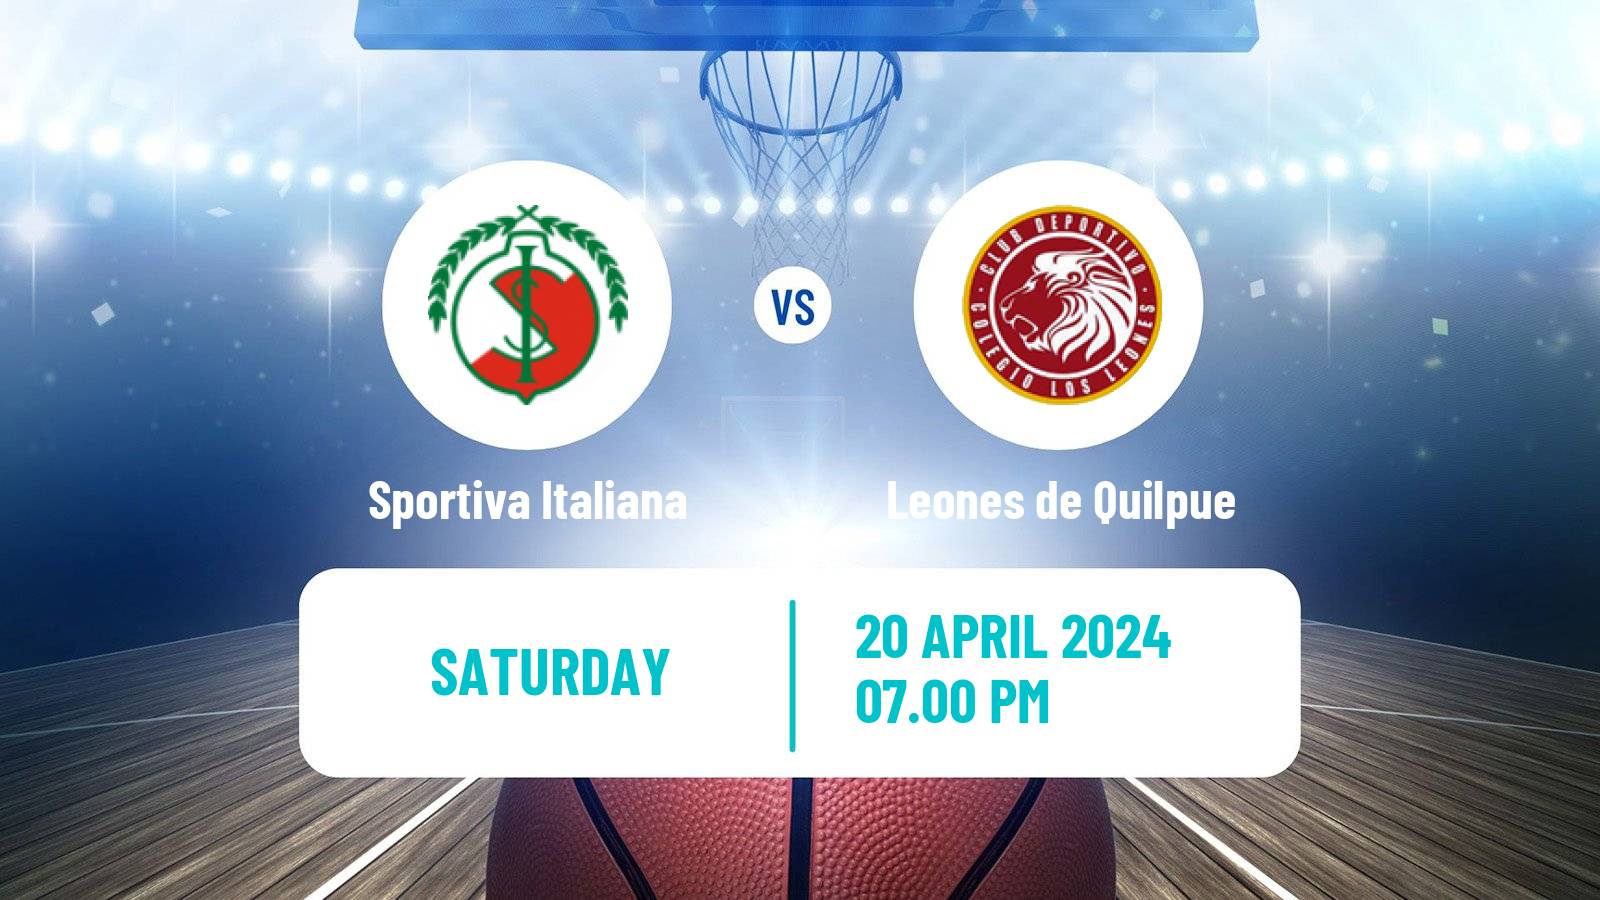 Basketball Chilean LNB Sportiva Italiana - Leones de Quilpue